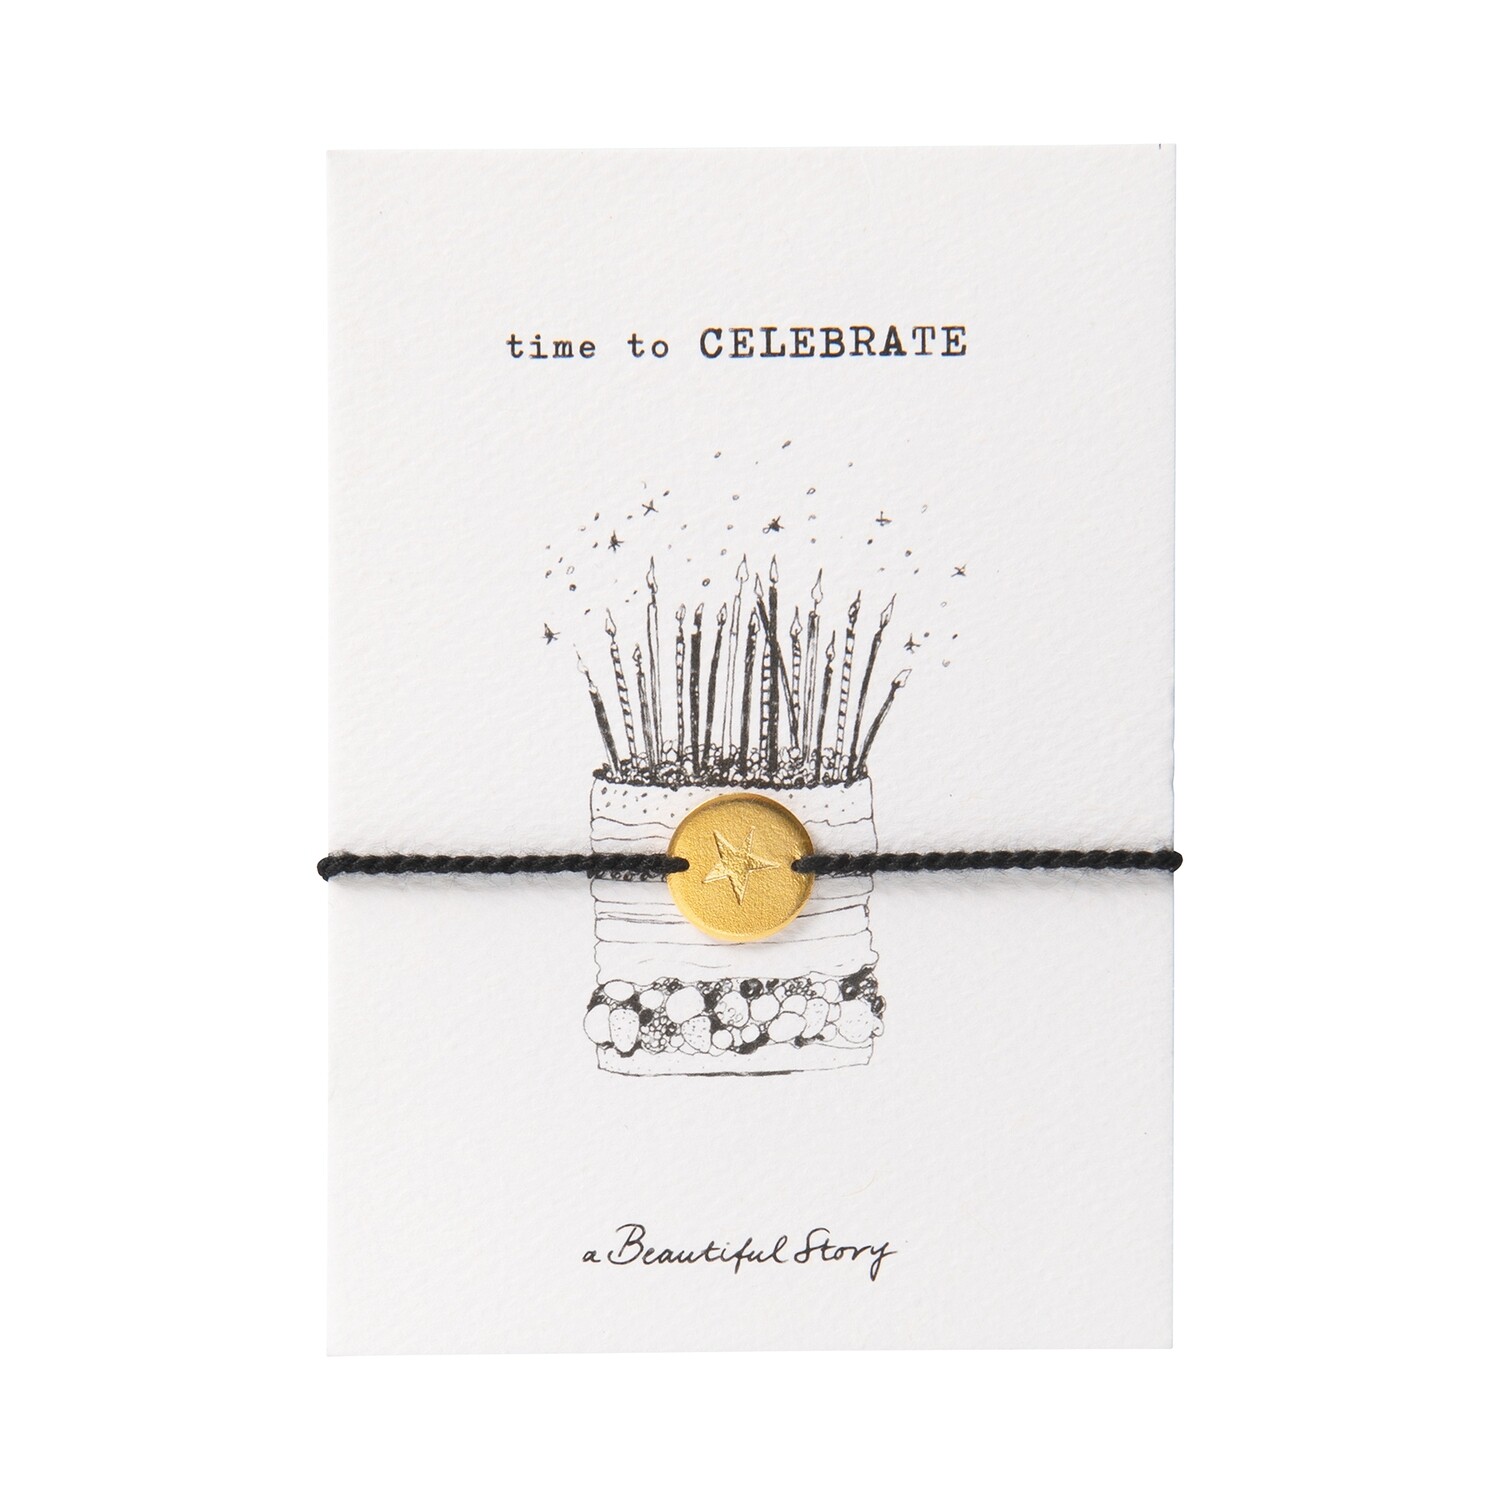 Postcard Jewelry - "Time to celebrate"